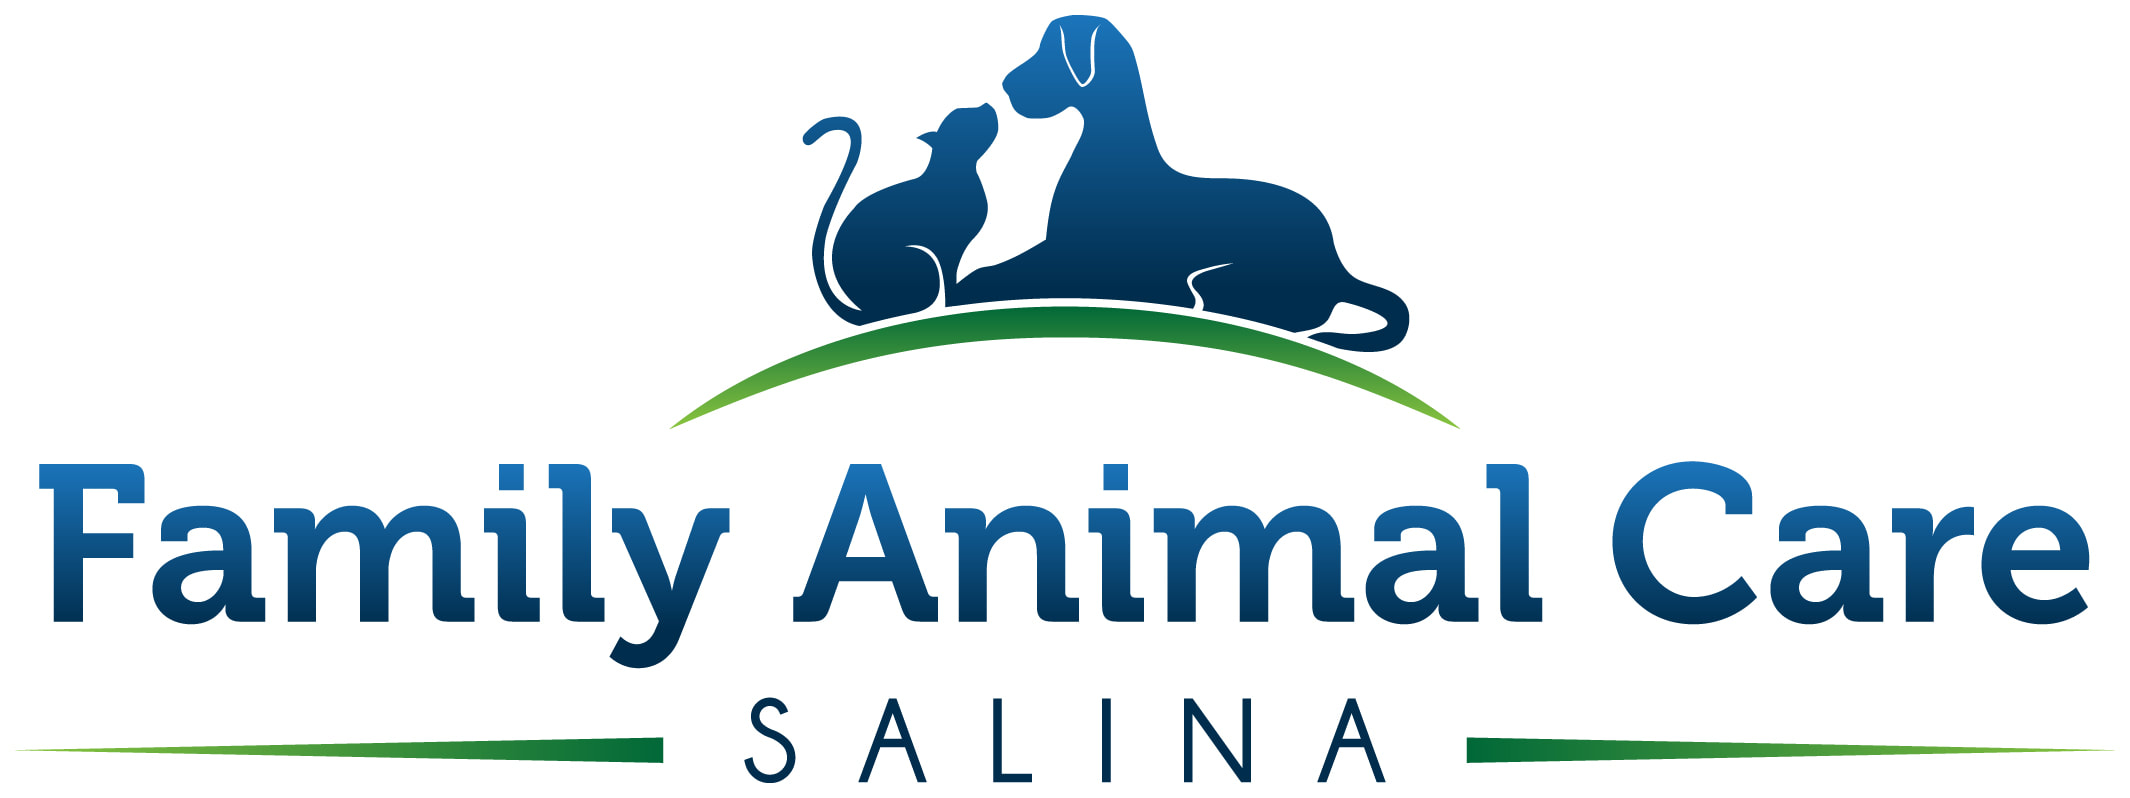 Family Animal Care of Salina